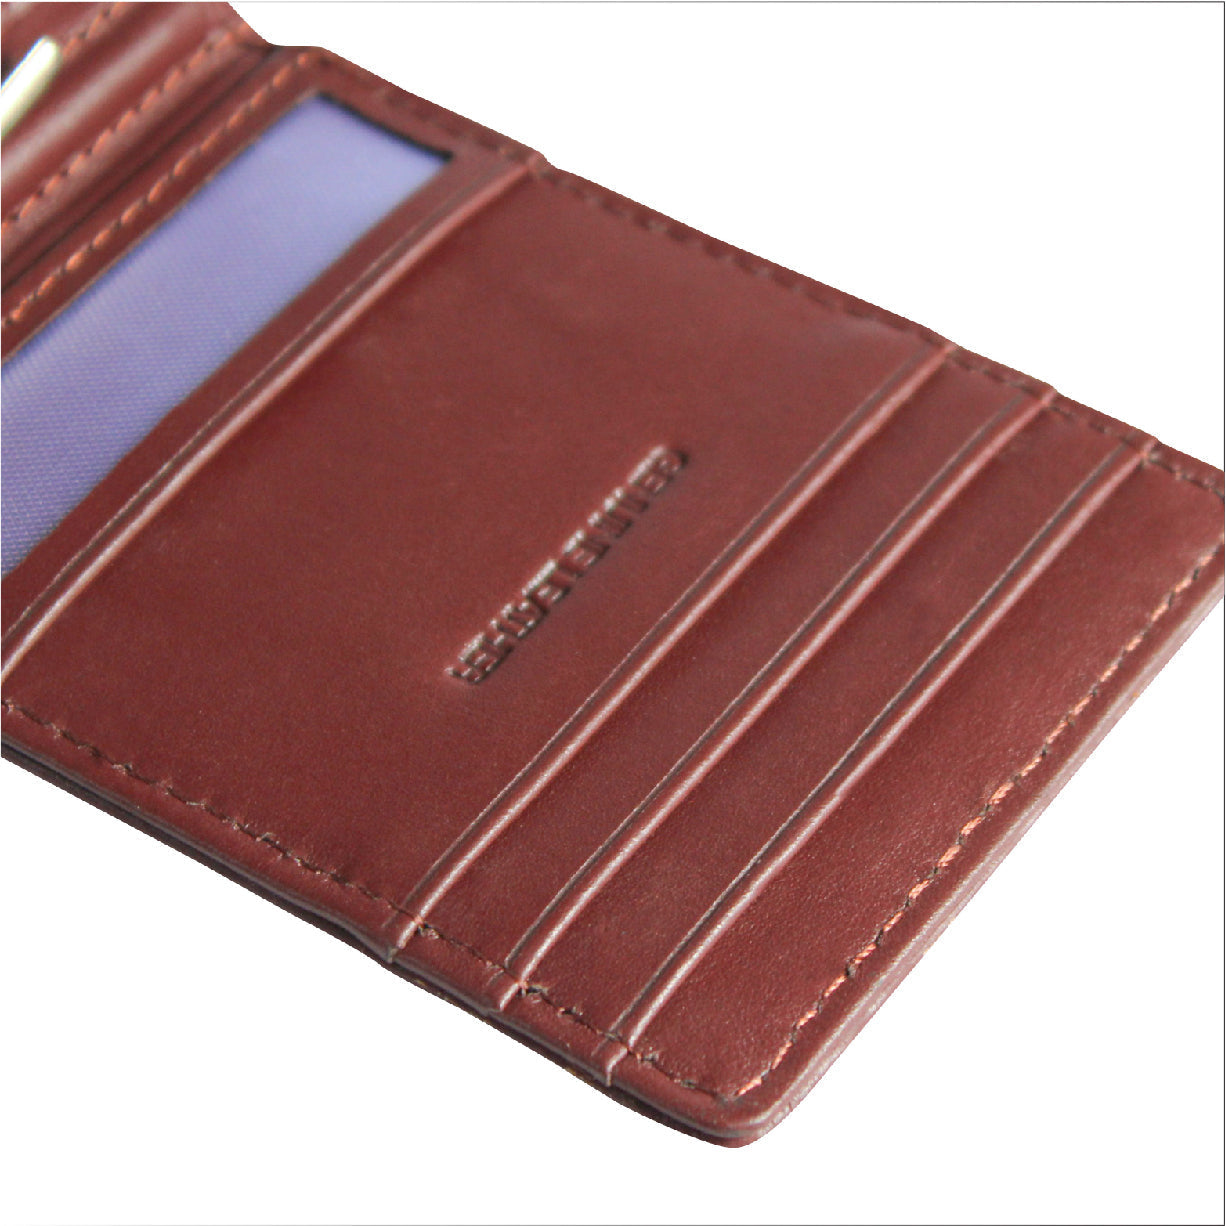 SLIM TRIM Sleek Soft Leather Money Clip ARWMC1014MR ARCADIO